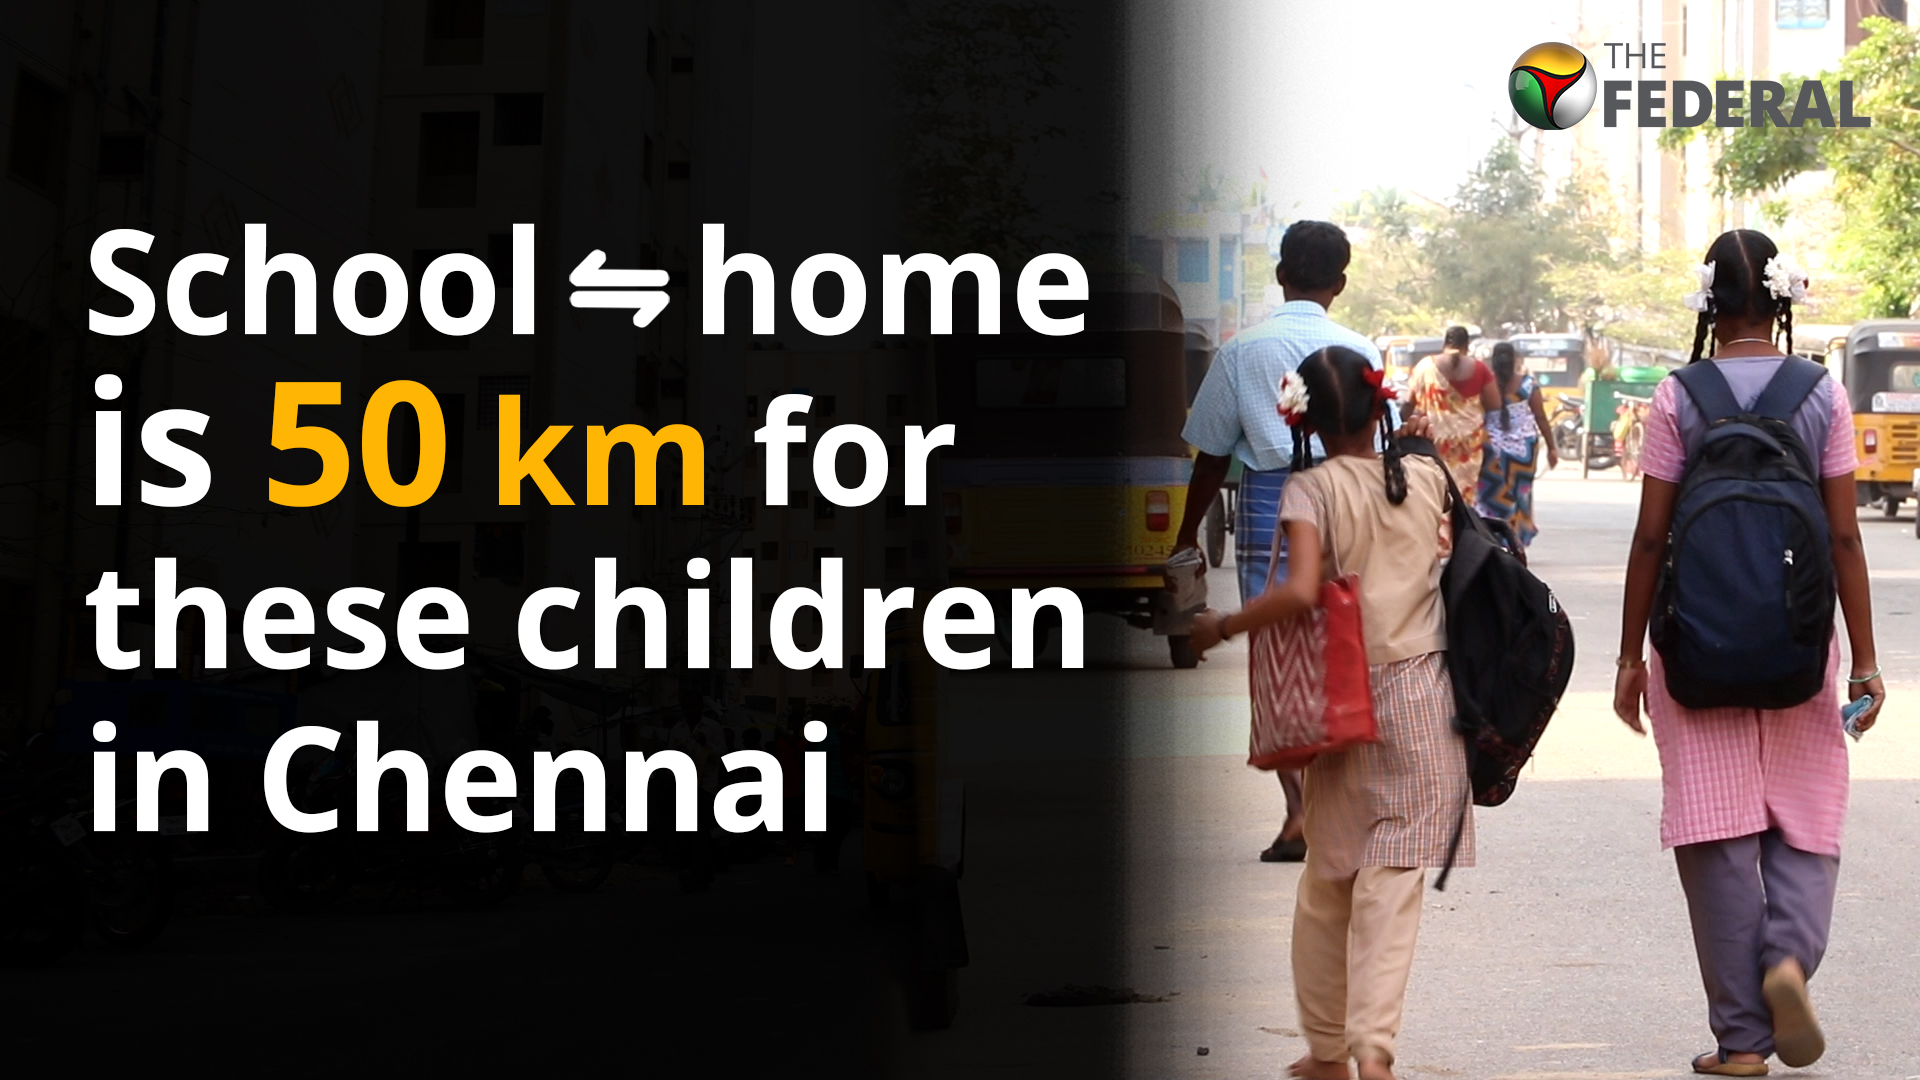 School is afar for these resettled children